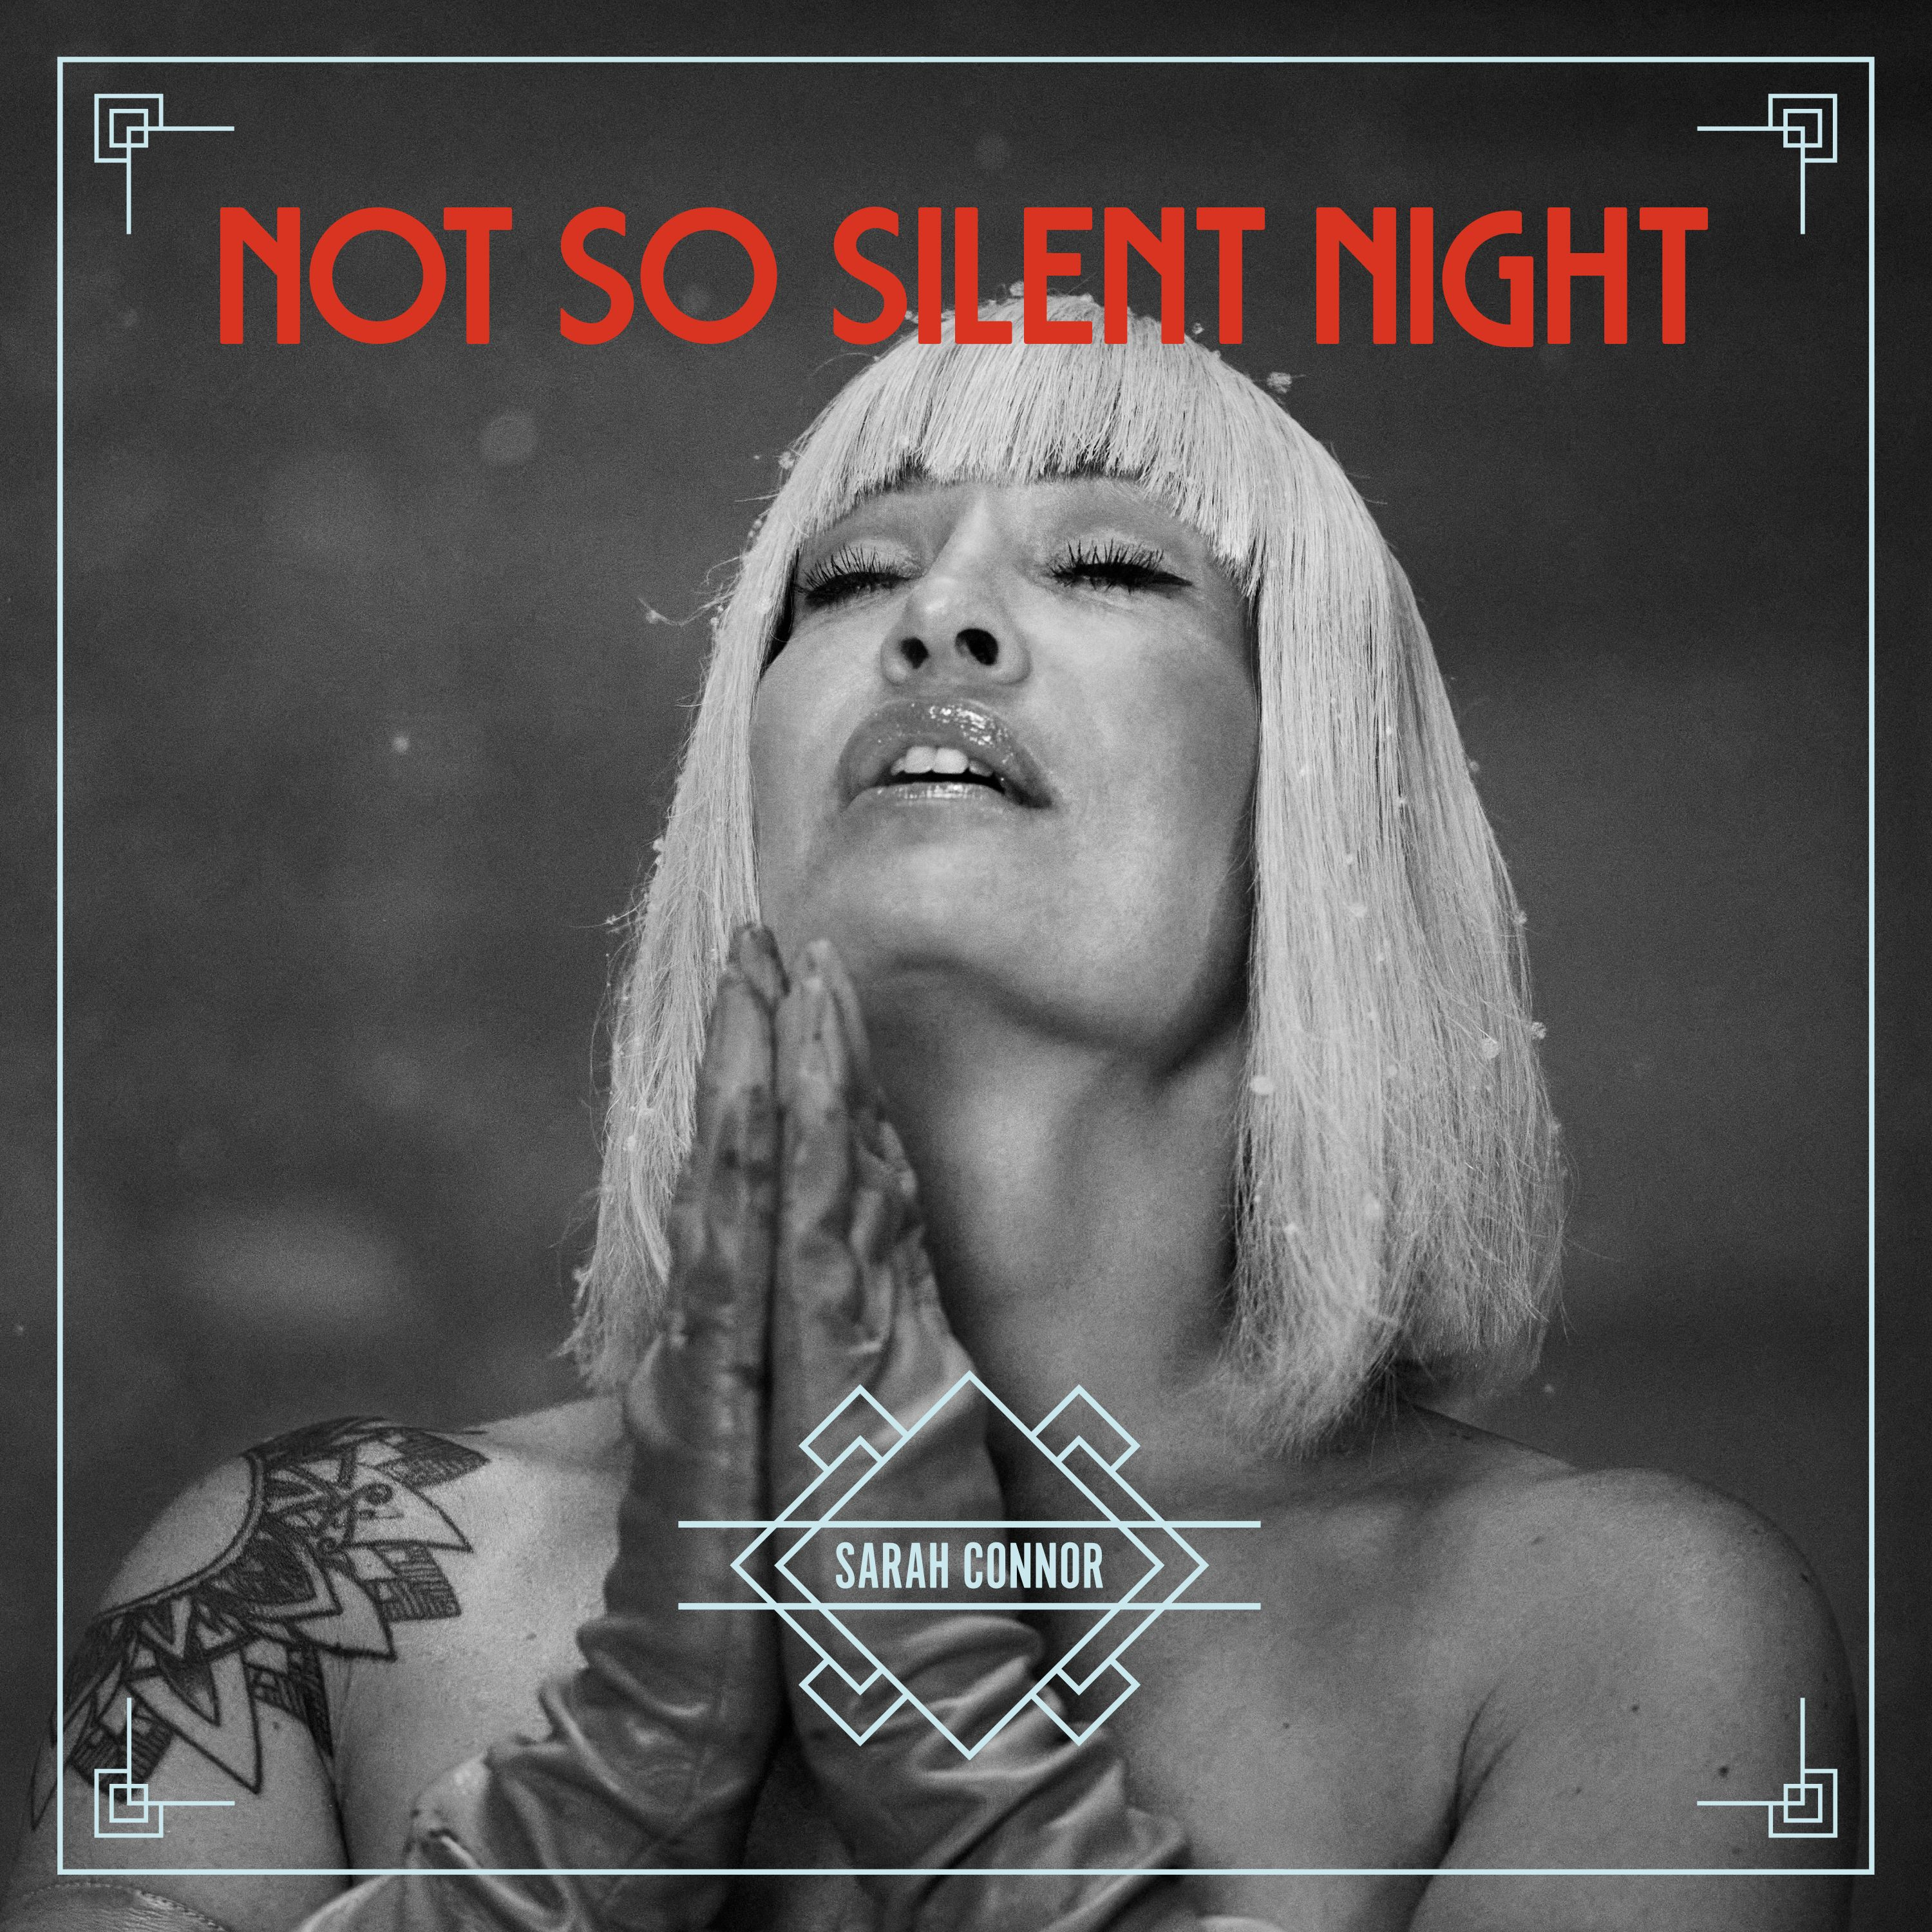 Night Not Connor - So Silent (CD) - Sarah